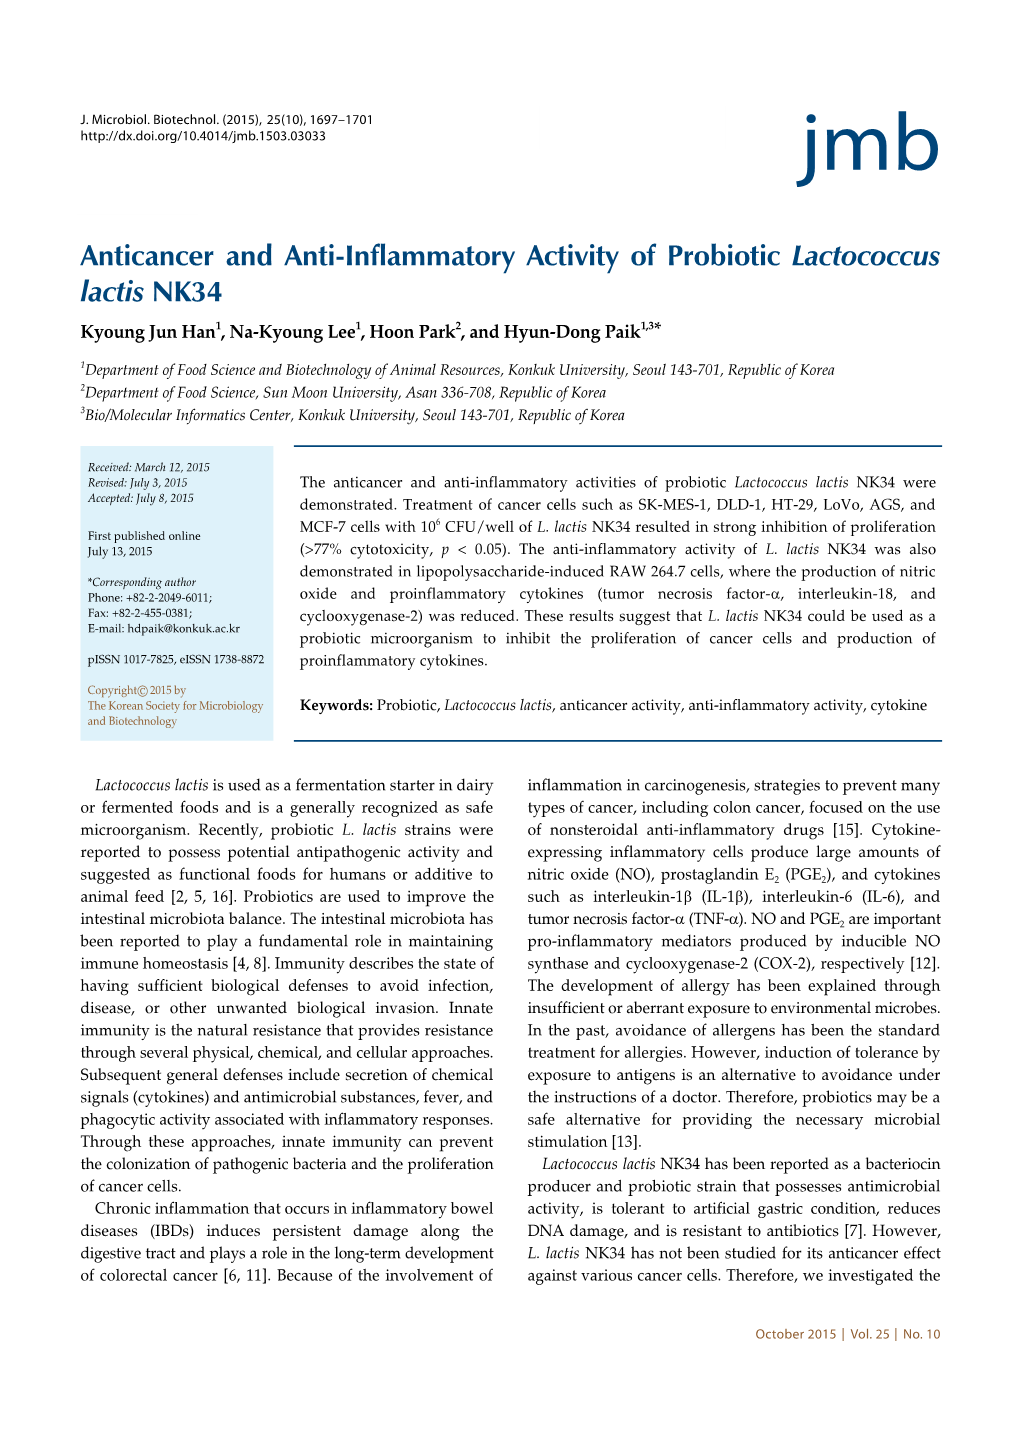 Anticancer and Anti-Inflammatory Activity of Probiotic Lactococcus Lactis NK34 Kyoung Jun Han1, Na-Kyoung Lee1, Hoon Park2, and Hyun-Dong Paik1,3*